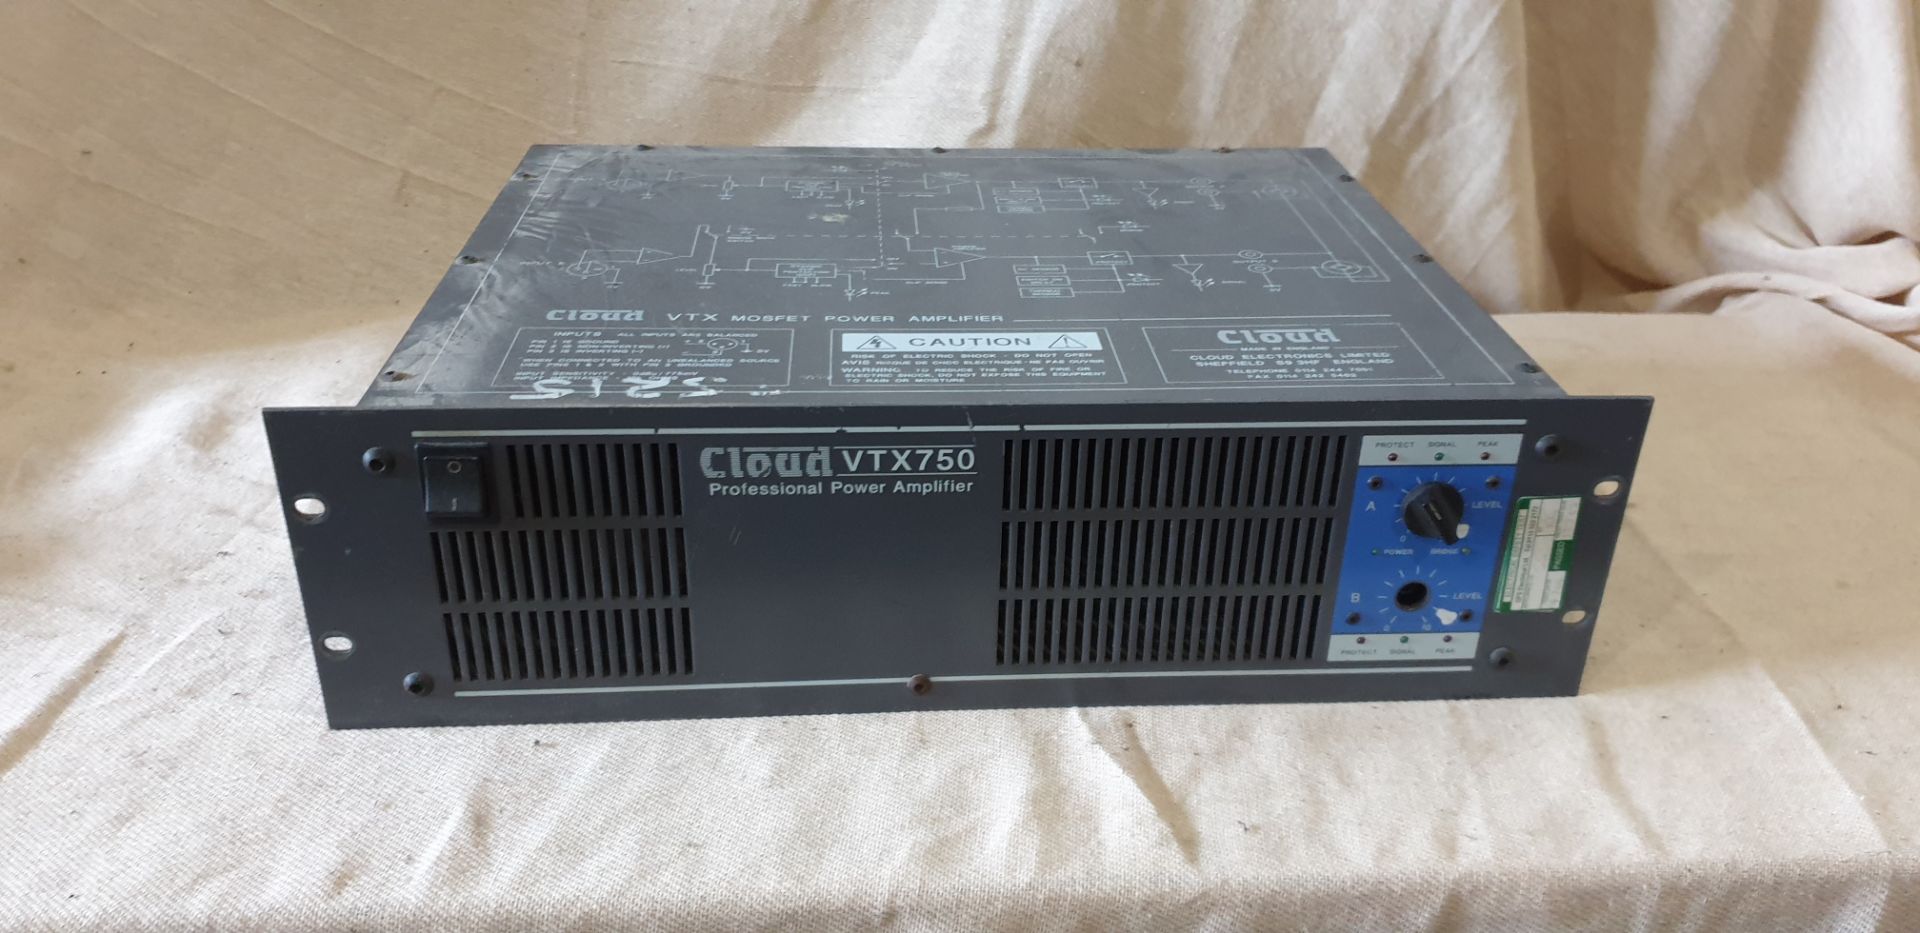 1 ; Cloud VTX750 Professional Power Amplifier.